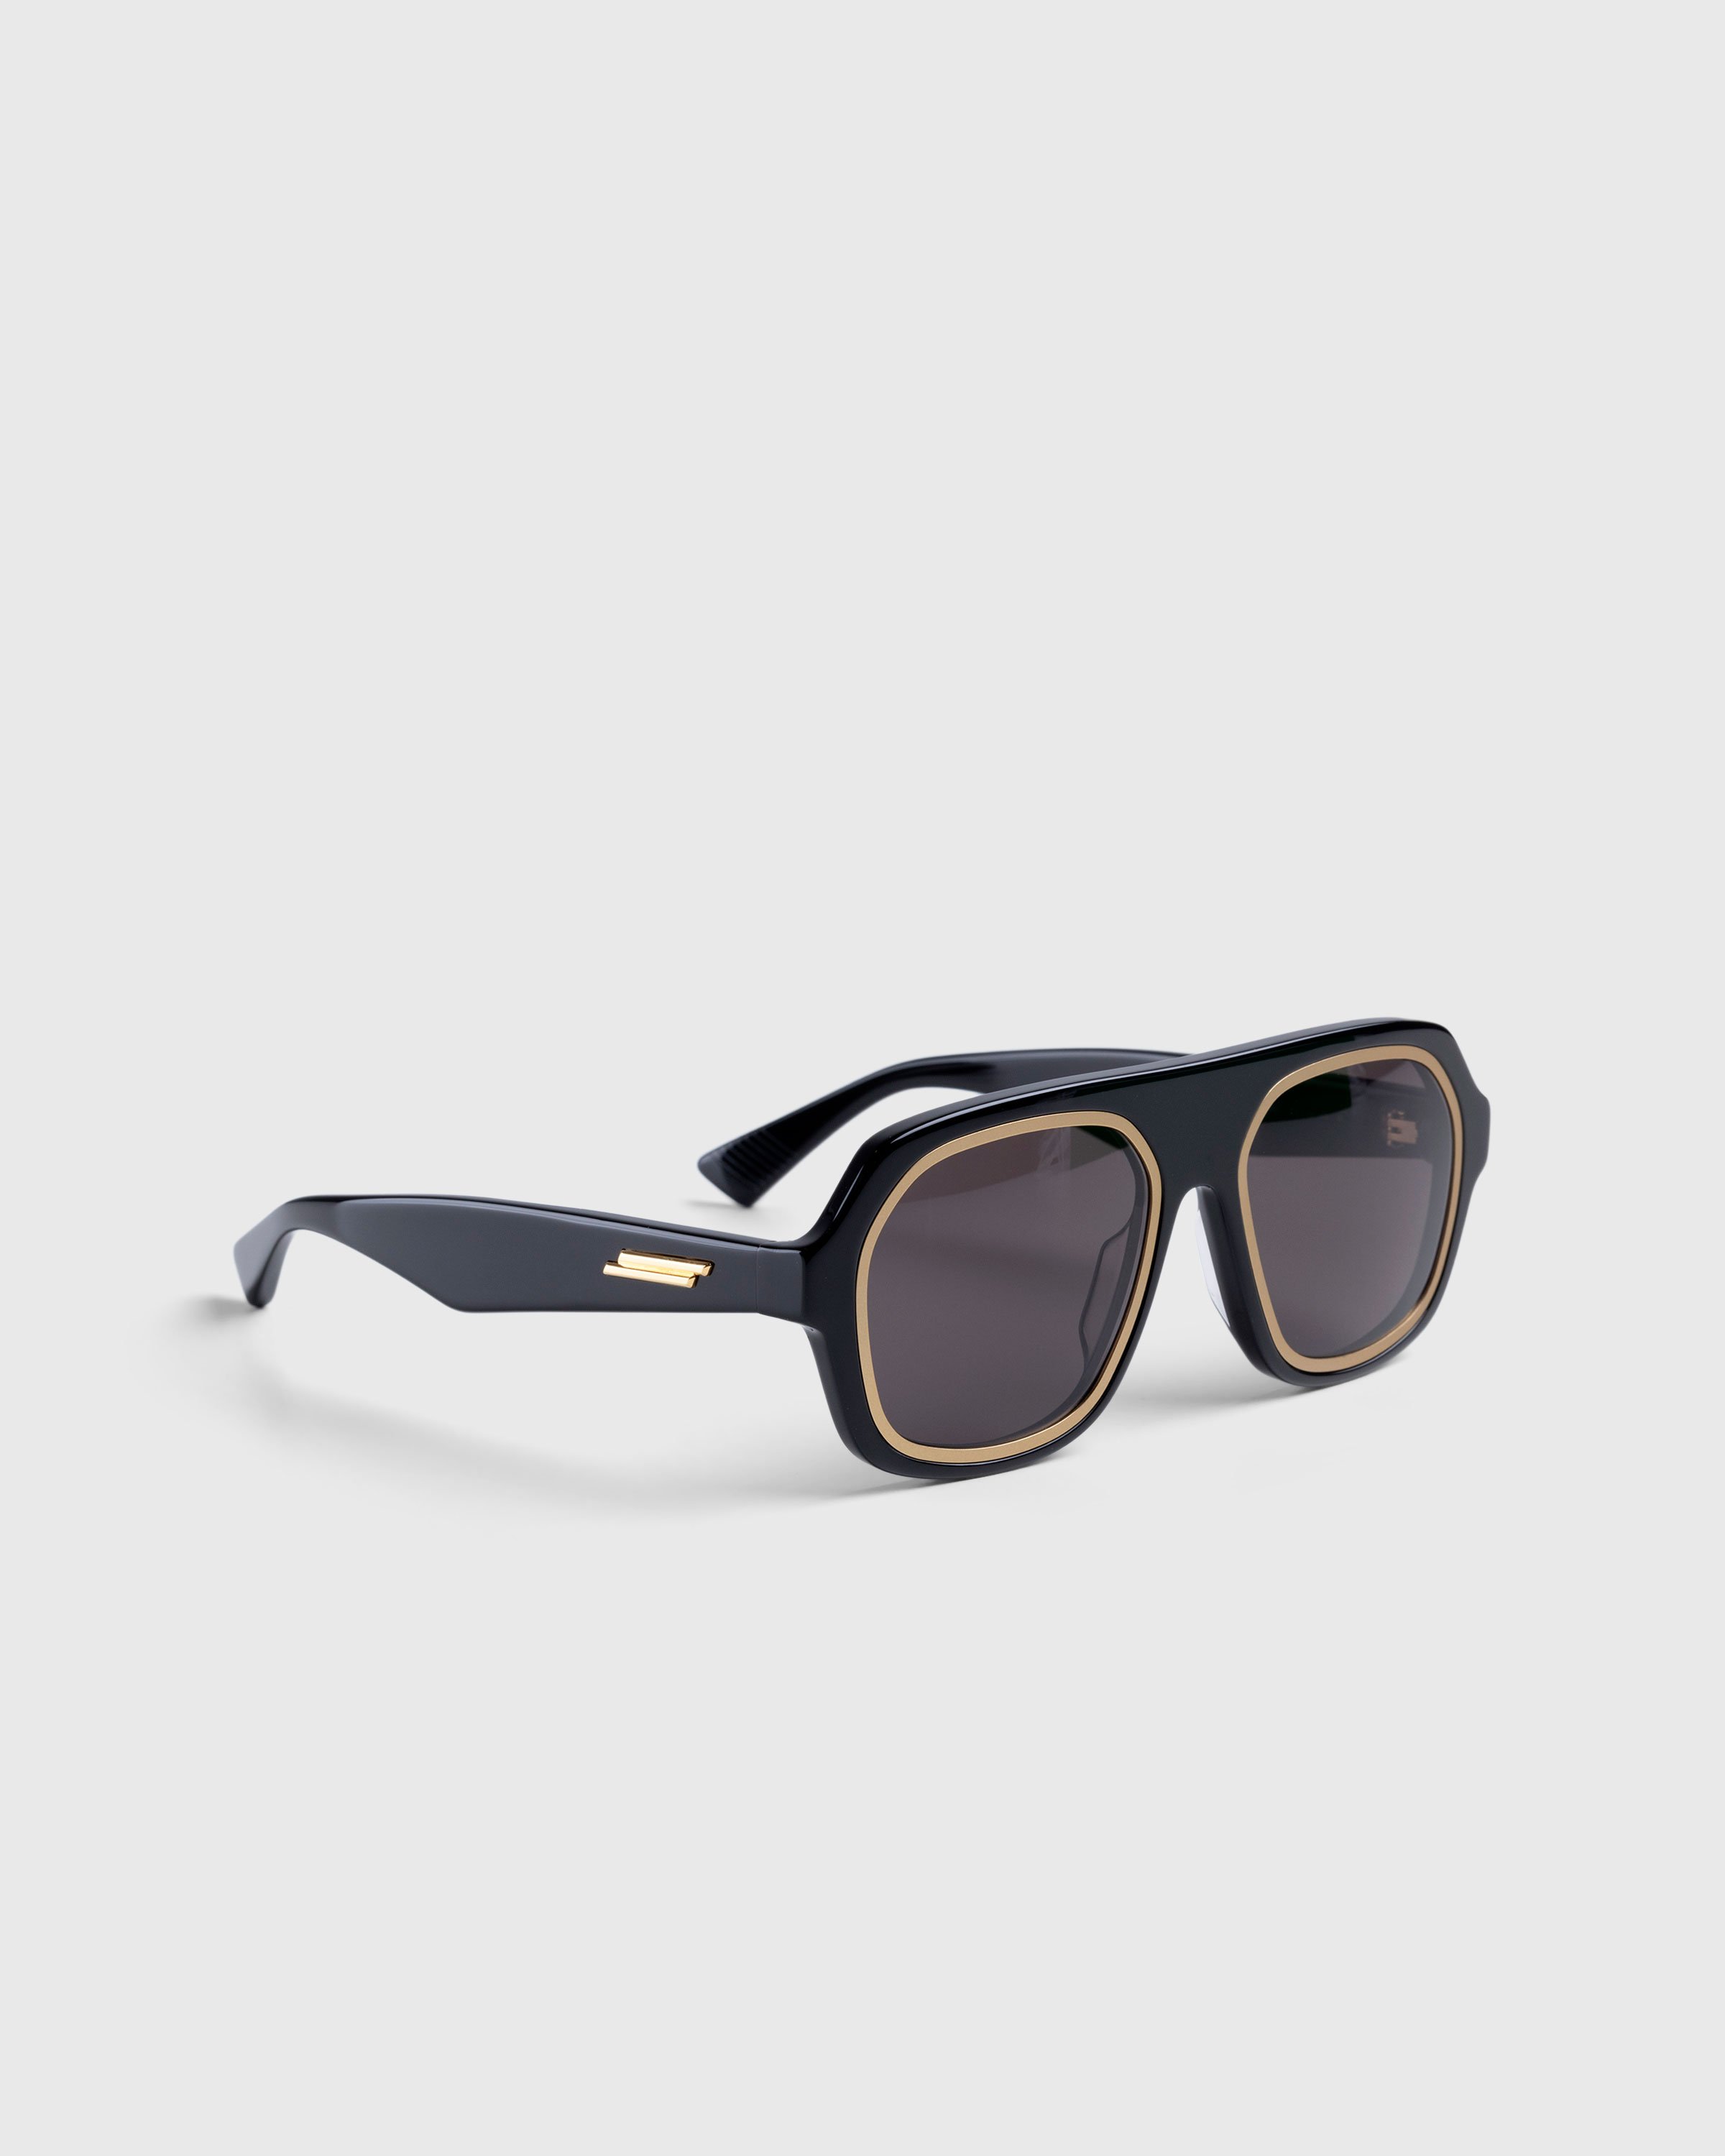 Bottega Veneta - Rim Aviator Sunglasses Black - Accessories - Black - Image 2